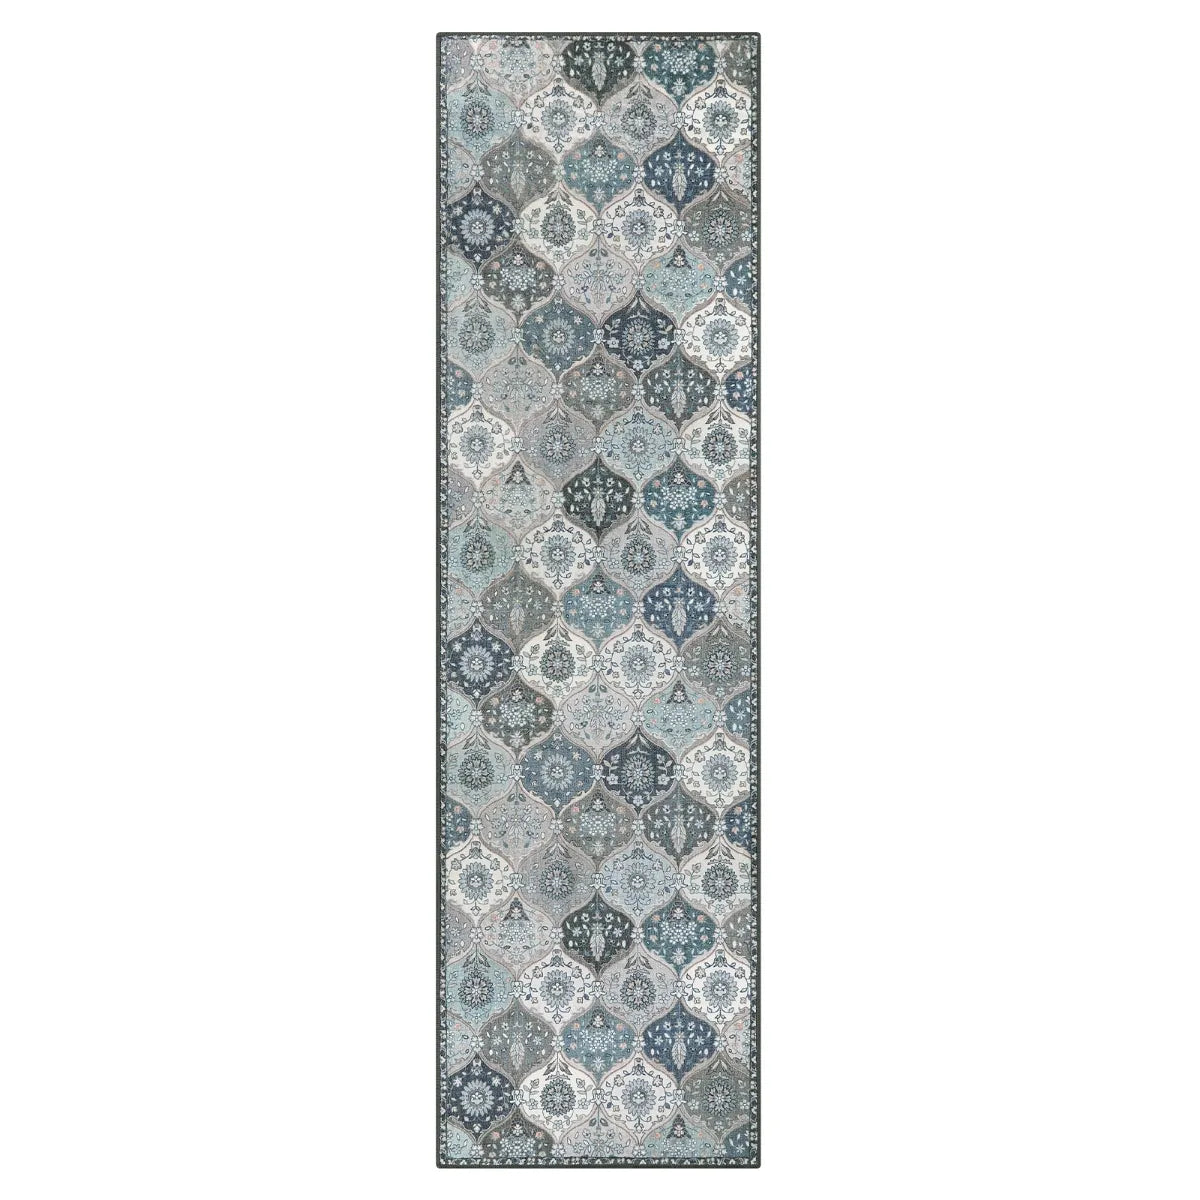 Elise Ultra-thin Transitional Vintage Floral Moroccan Trellis Blue Rug